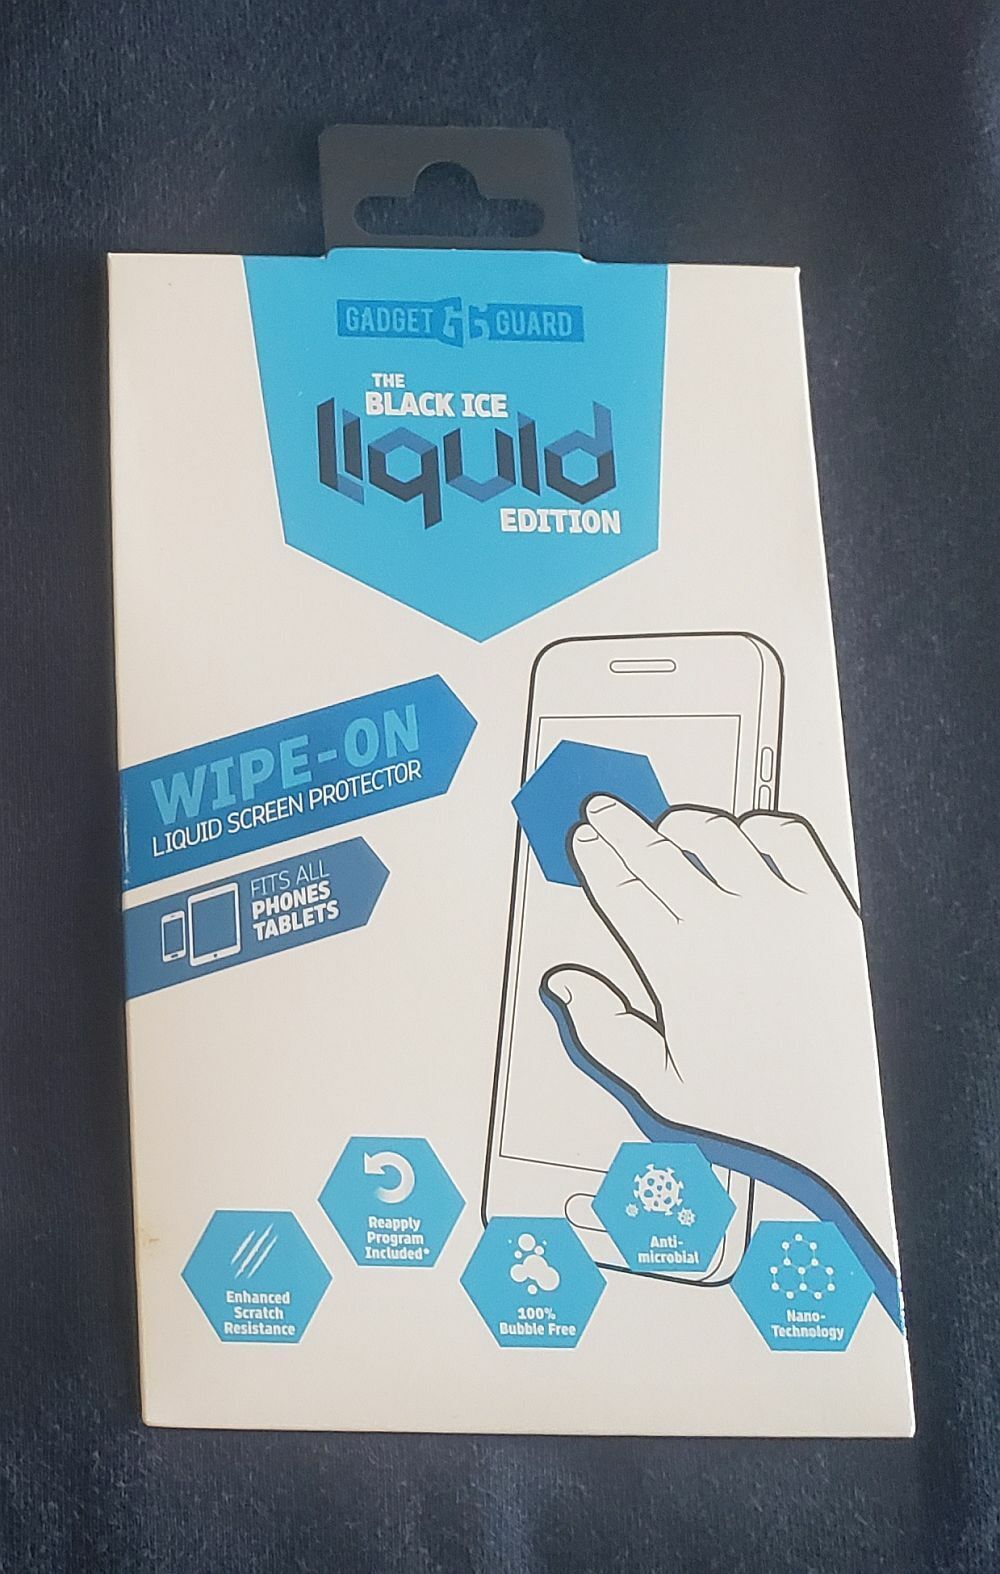 Gadget Guard Black Ice Liquid Edition Screen Glass Protector NEW